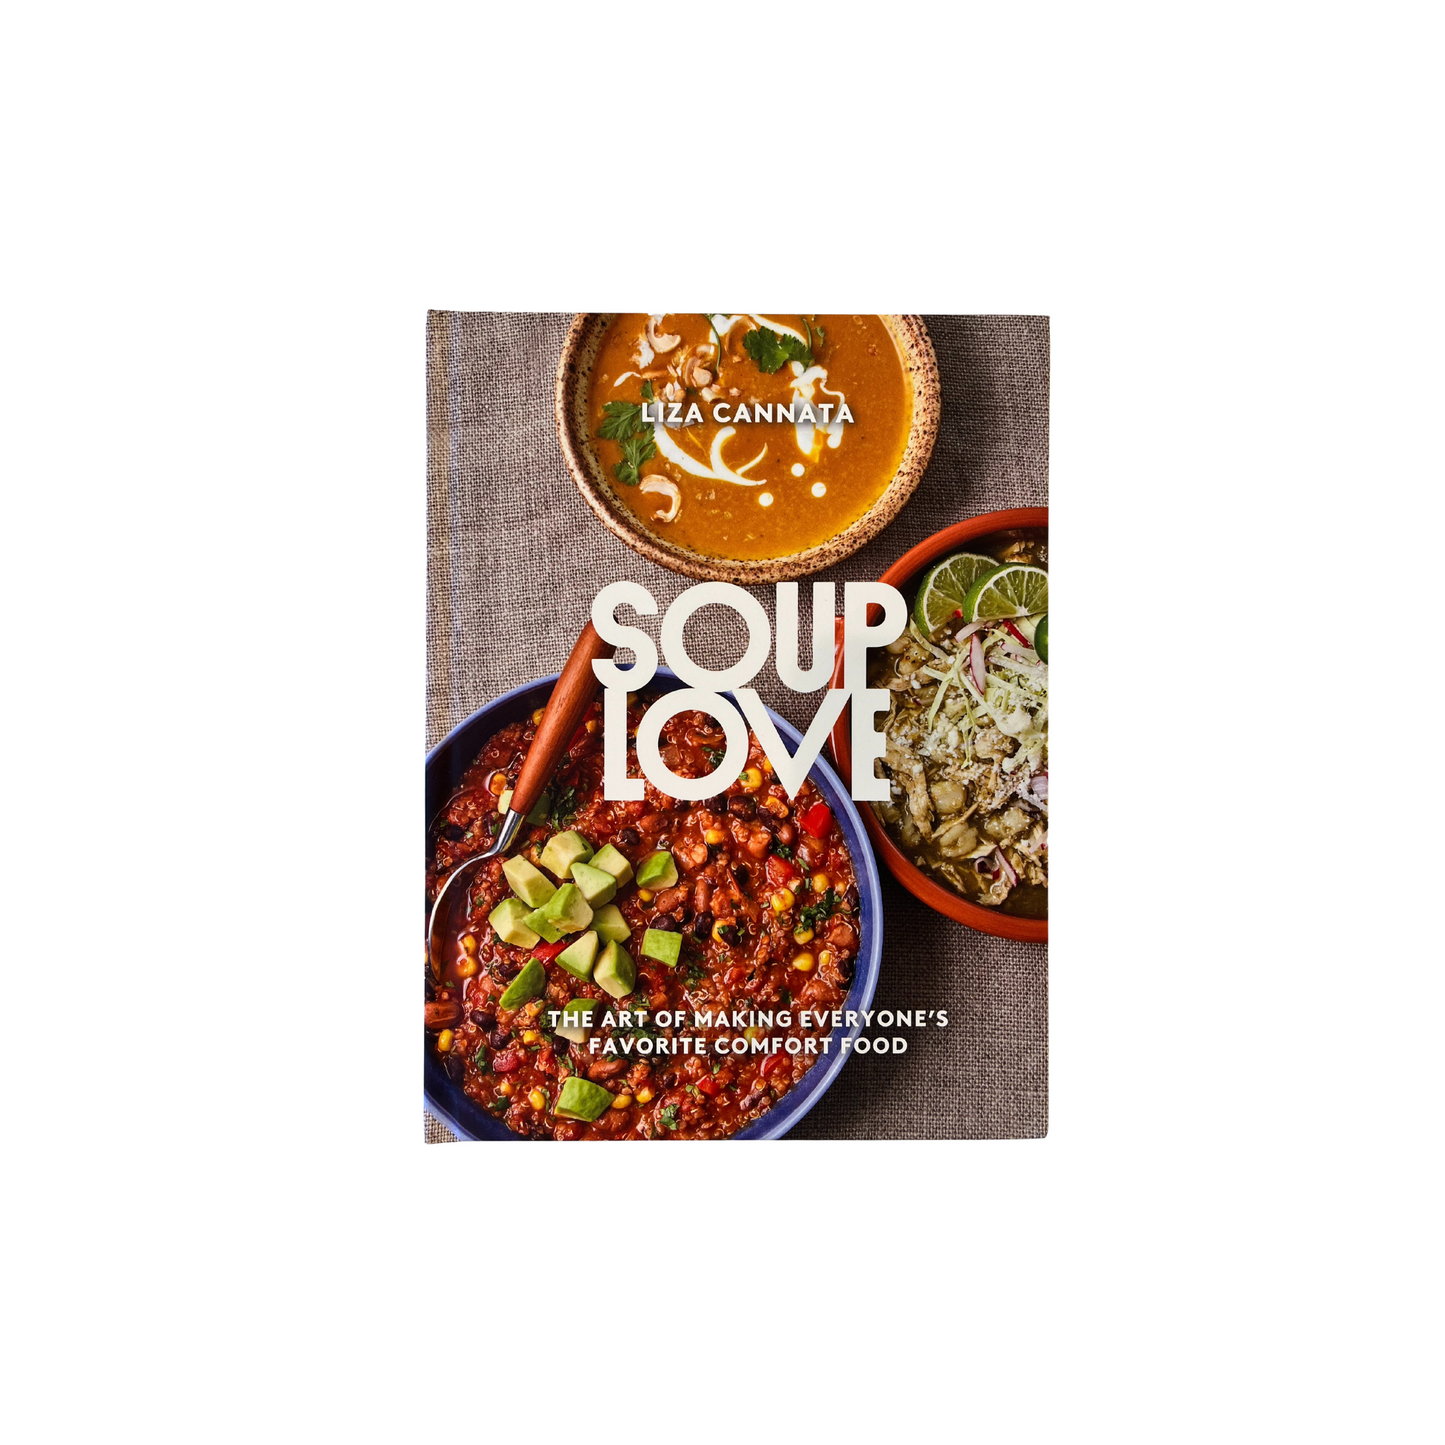 Soup Love by Liza Cannata